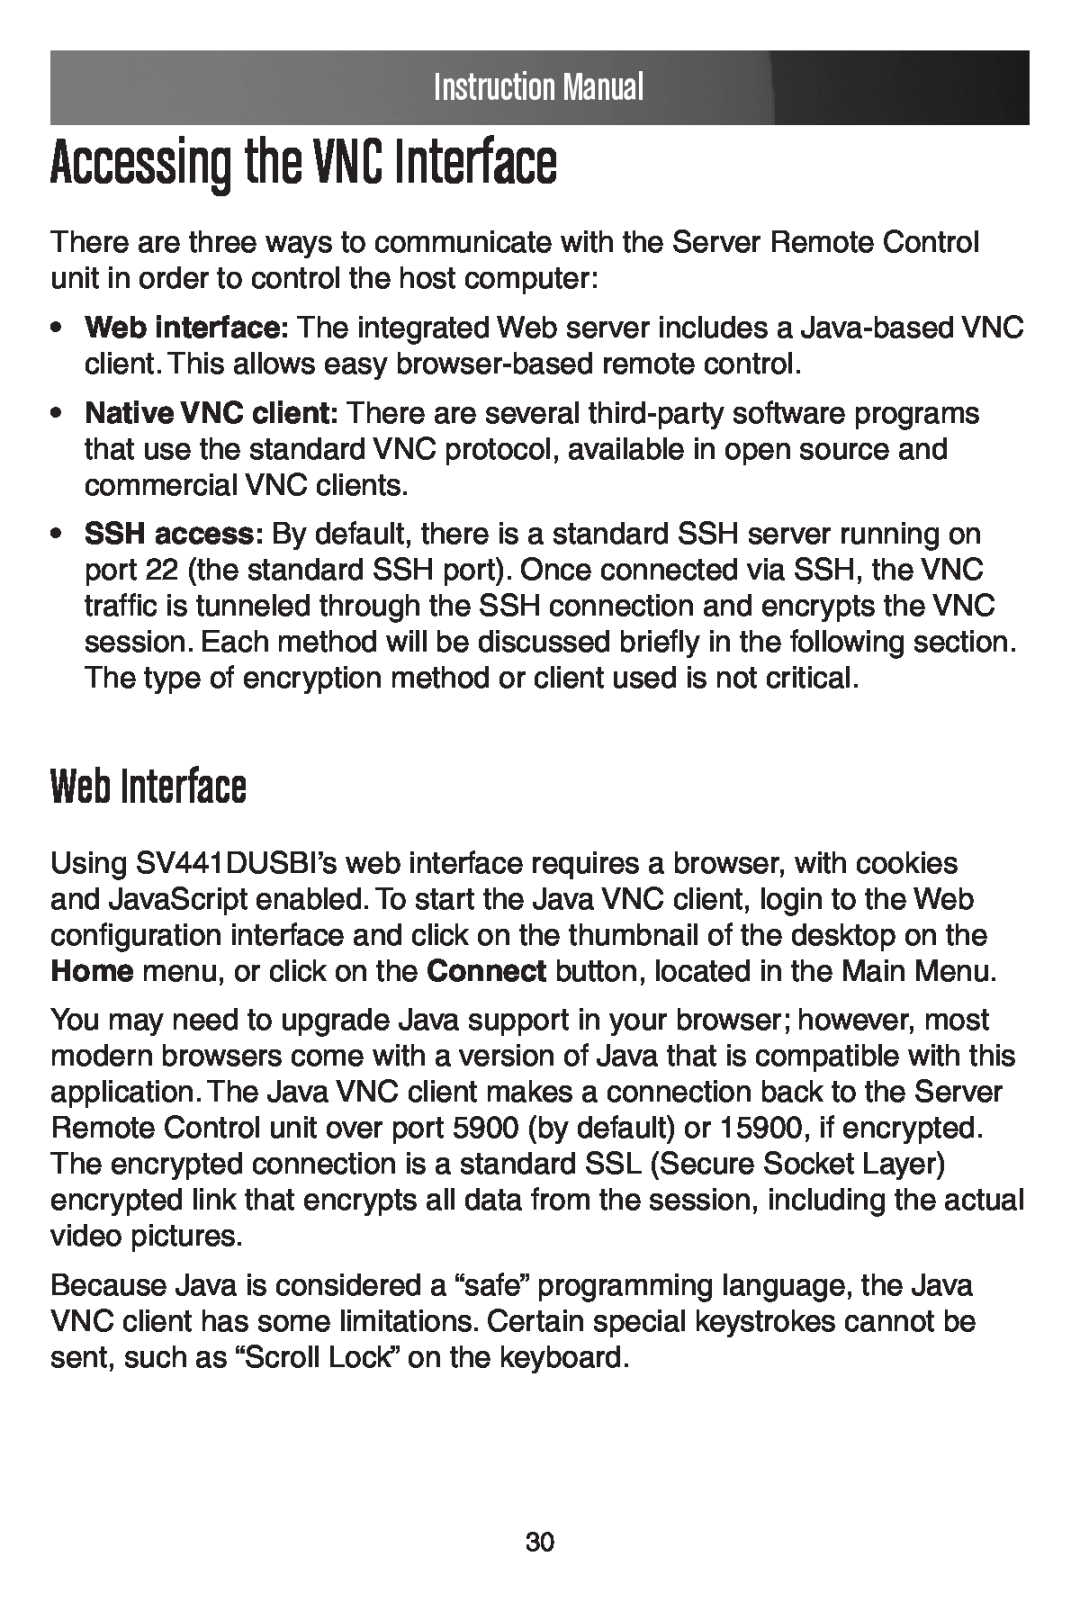 StarTech.com SV441DUSBI instruction manual Accessing the VNC Interface, Web Interface, Instruction Manual 